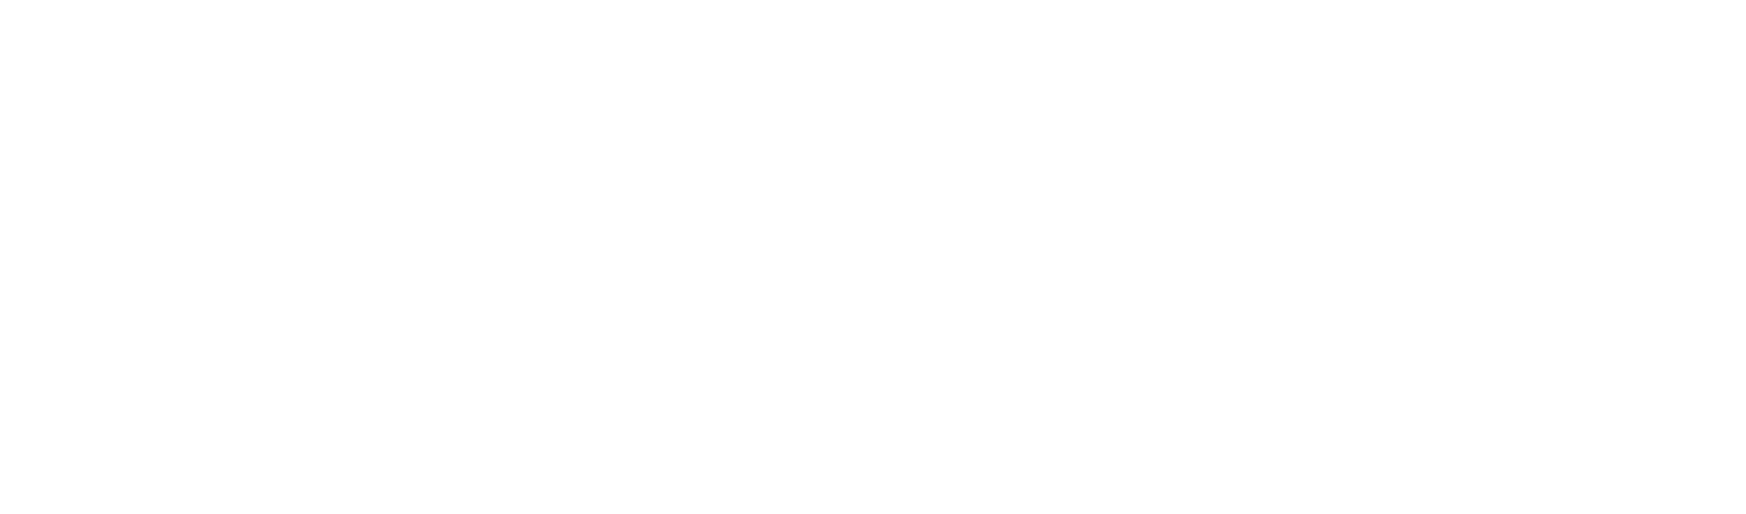 Metals Testing Services logo